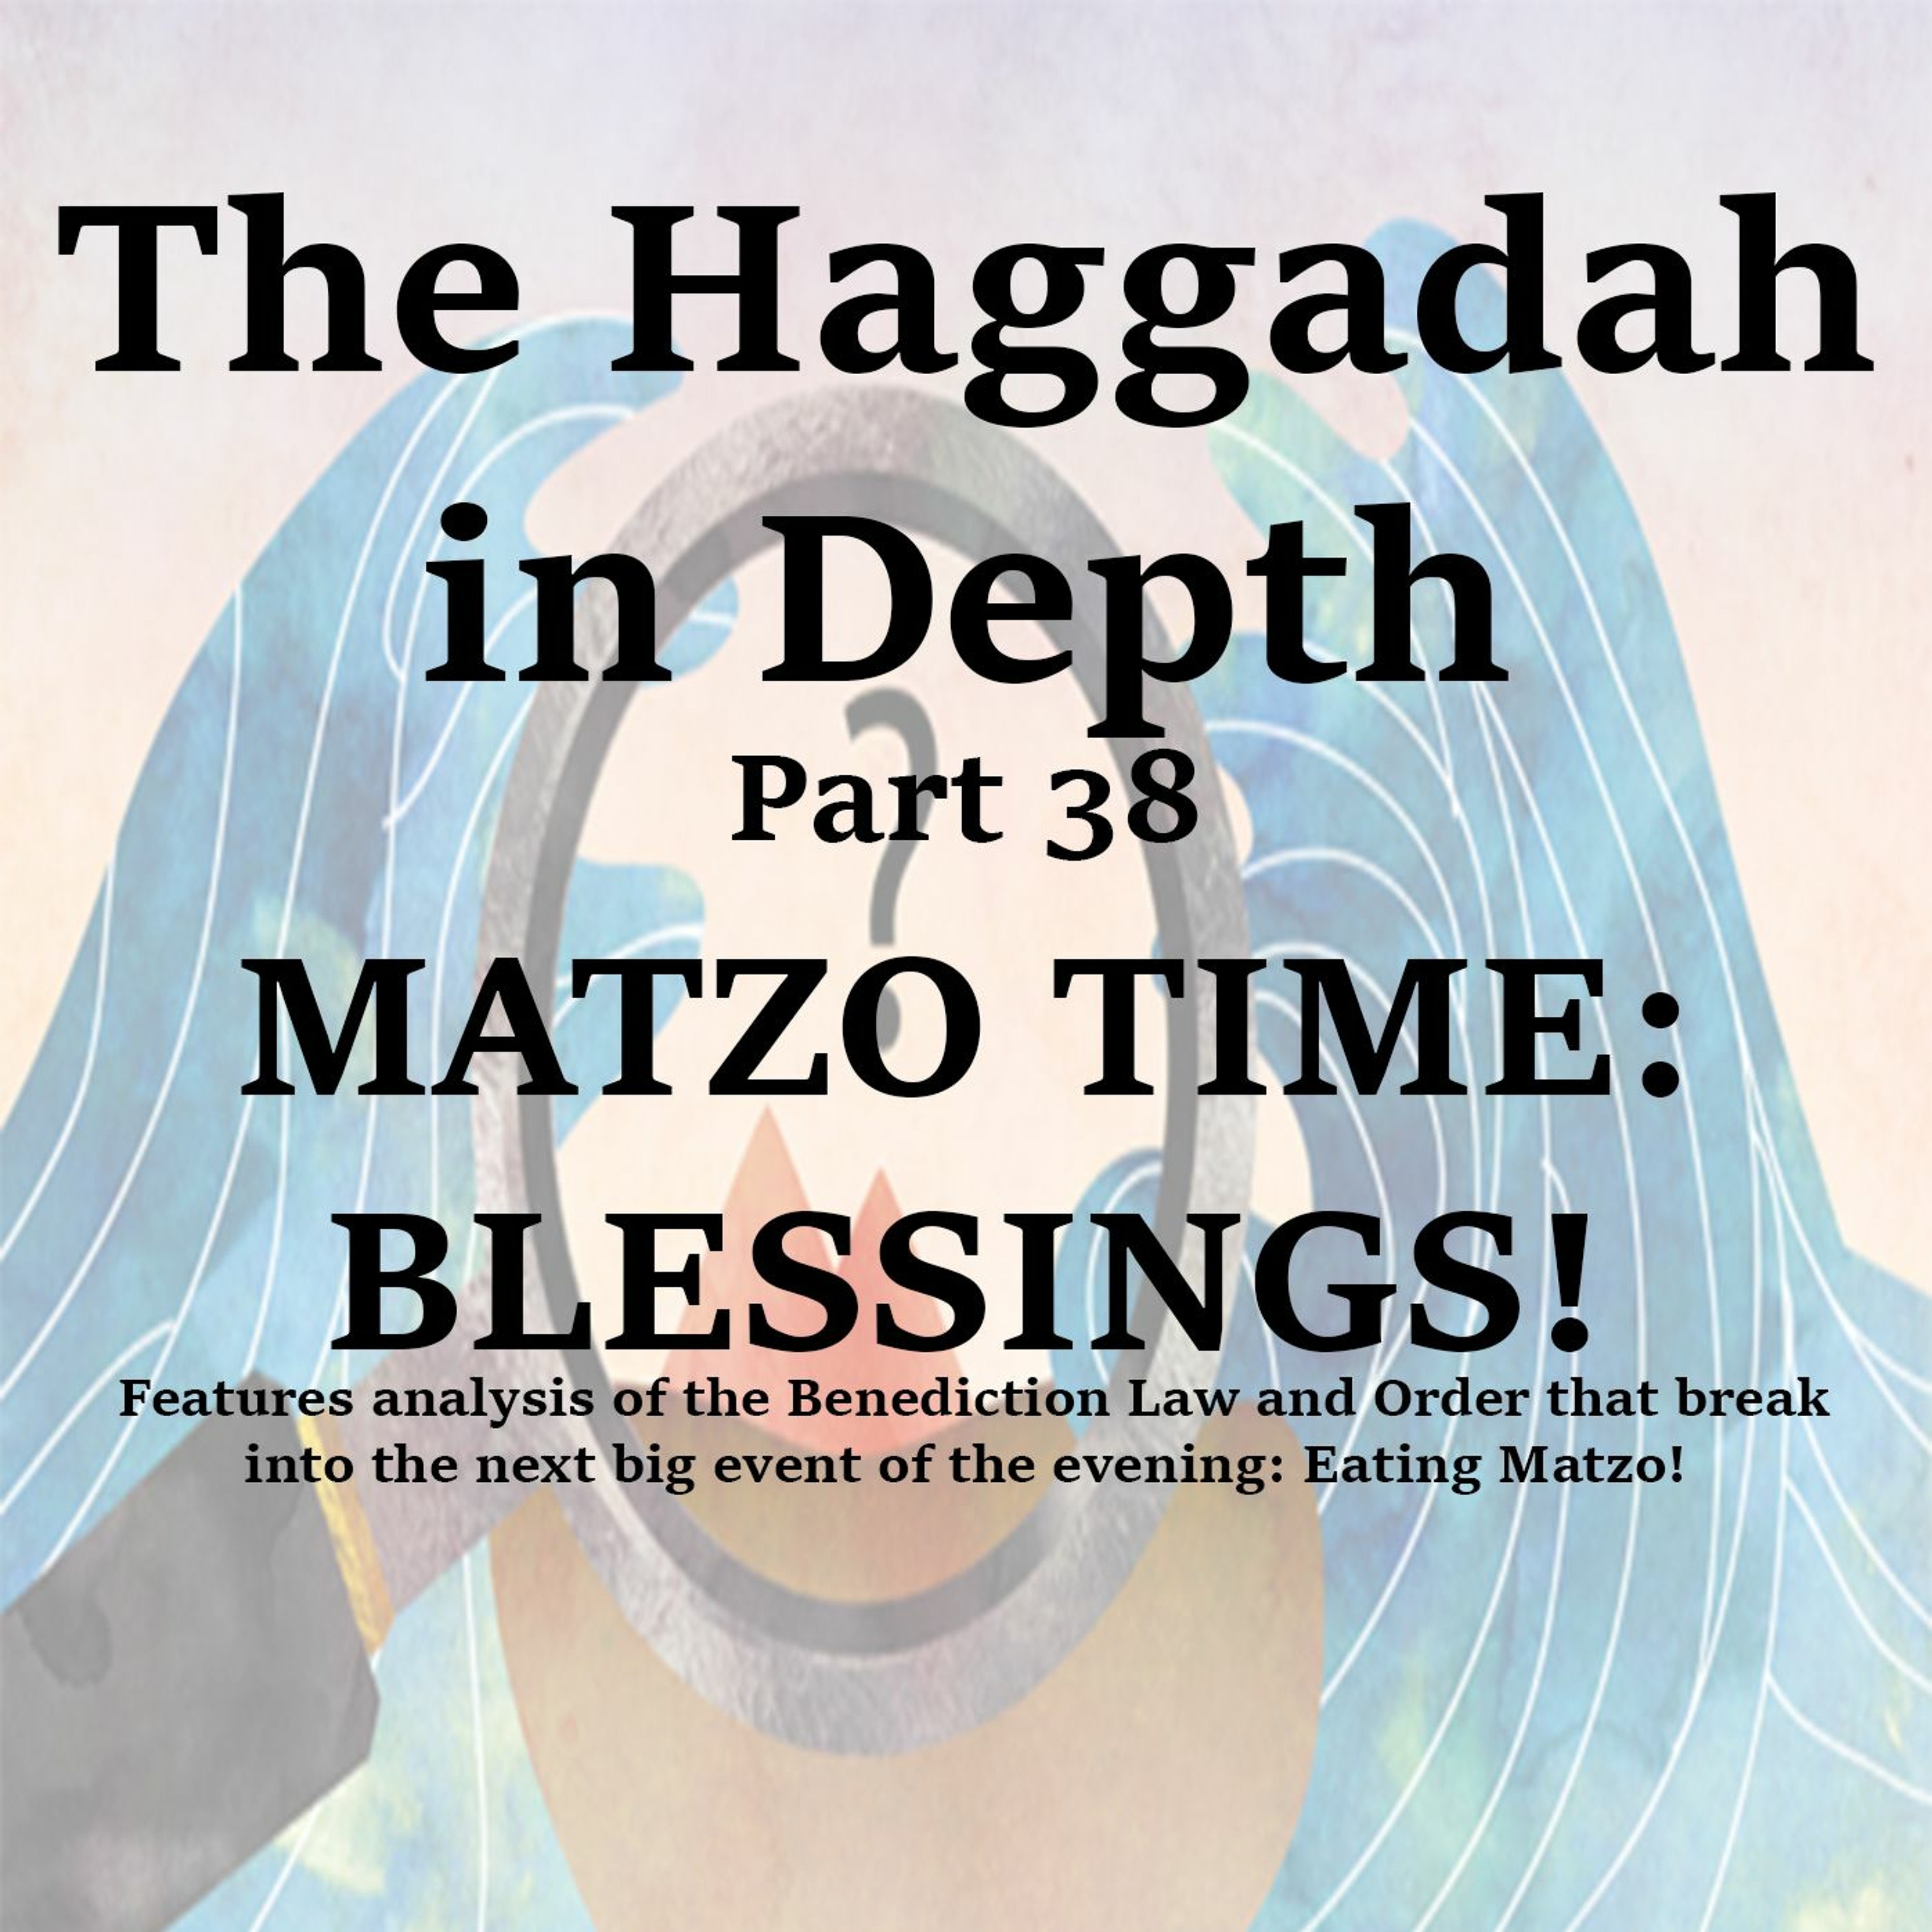 MATZO TIME BLESSINGS